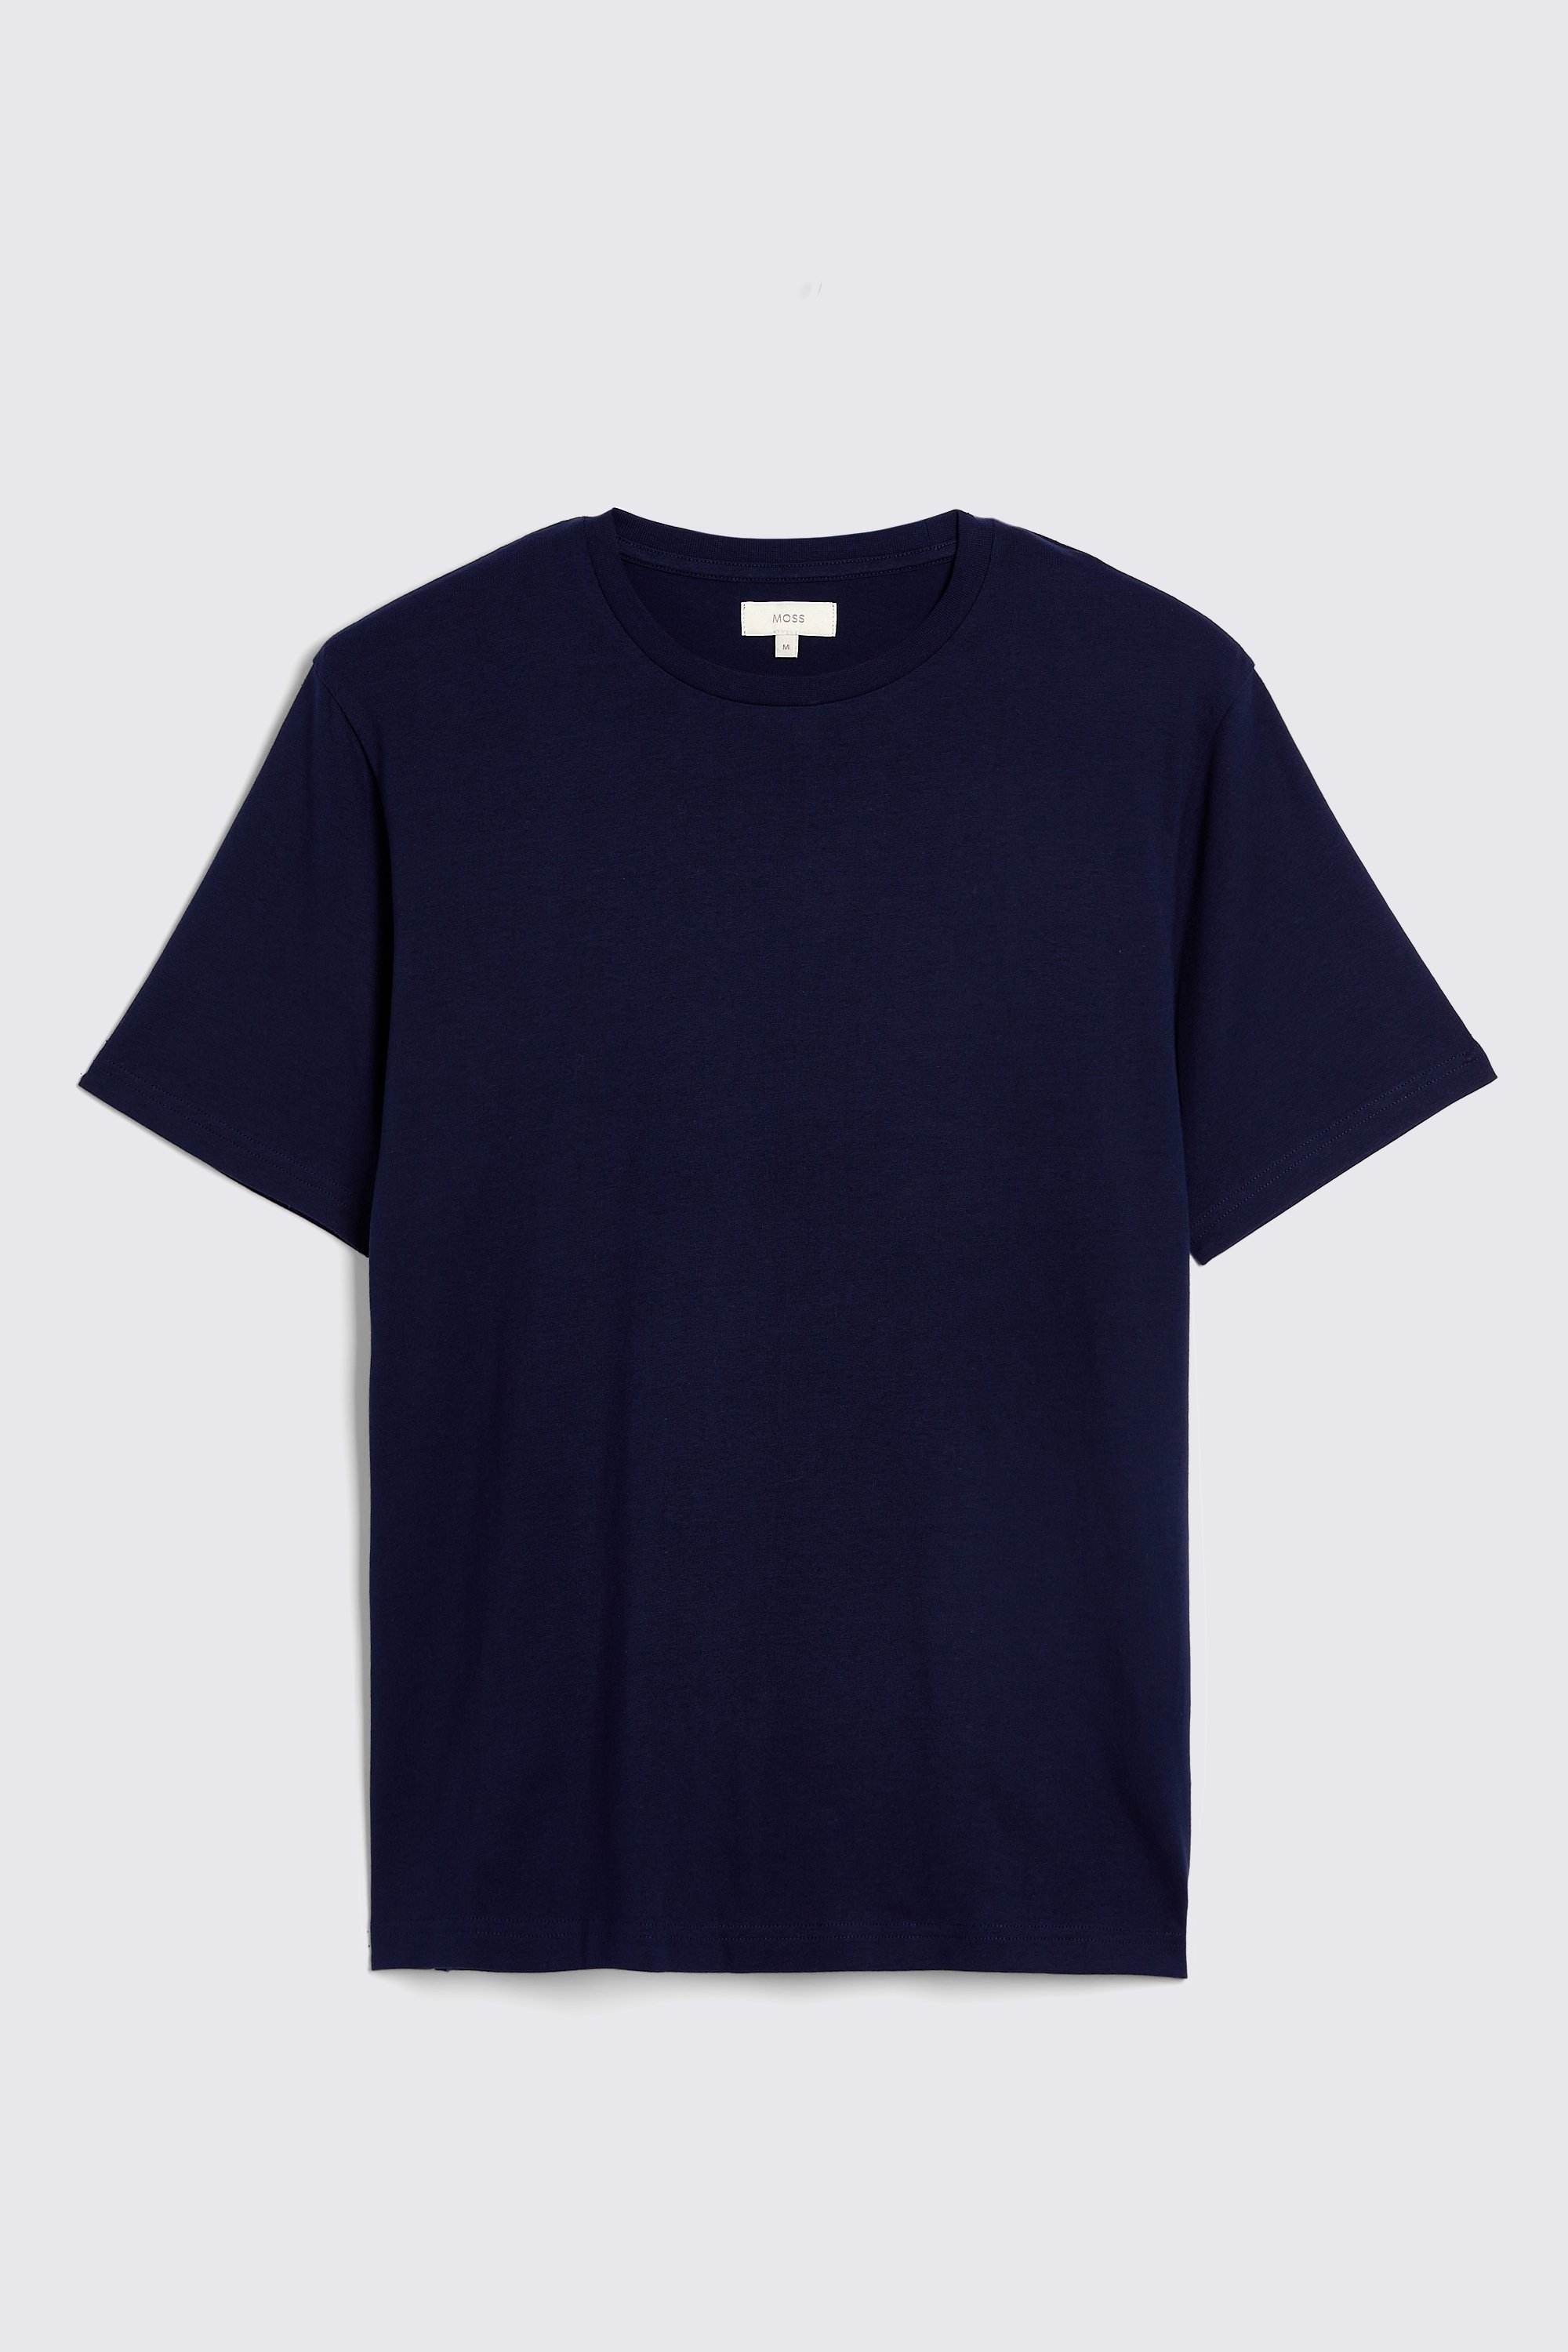 Navy Crew Neck T-Shirt | Buy Online at Moss